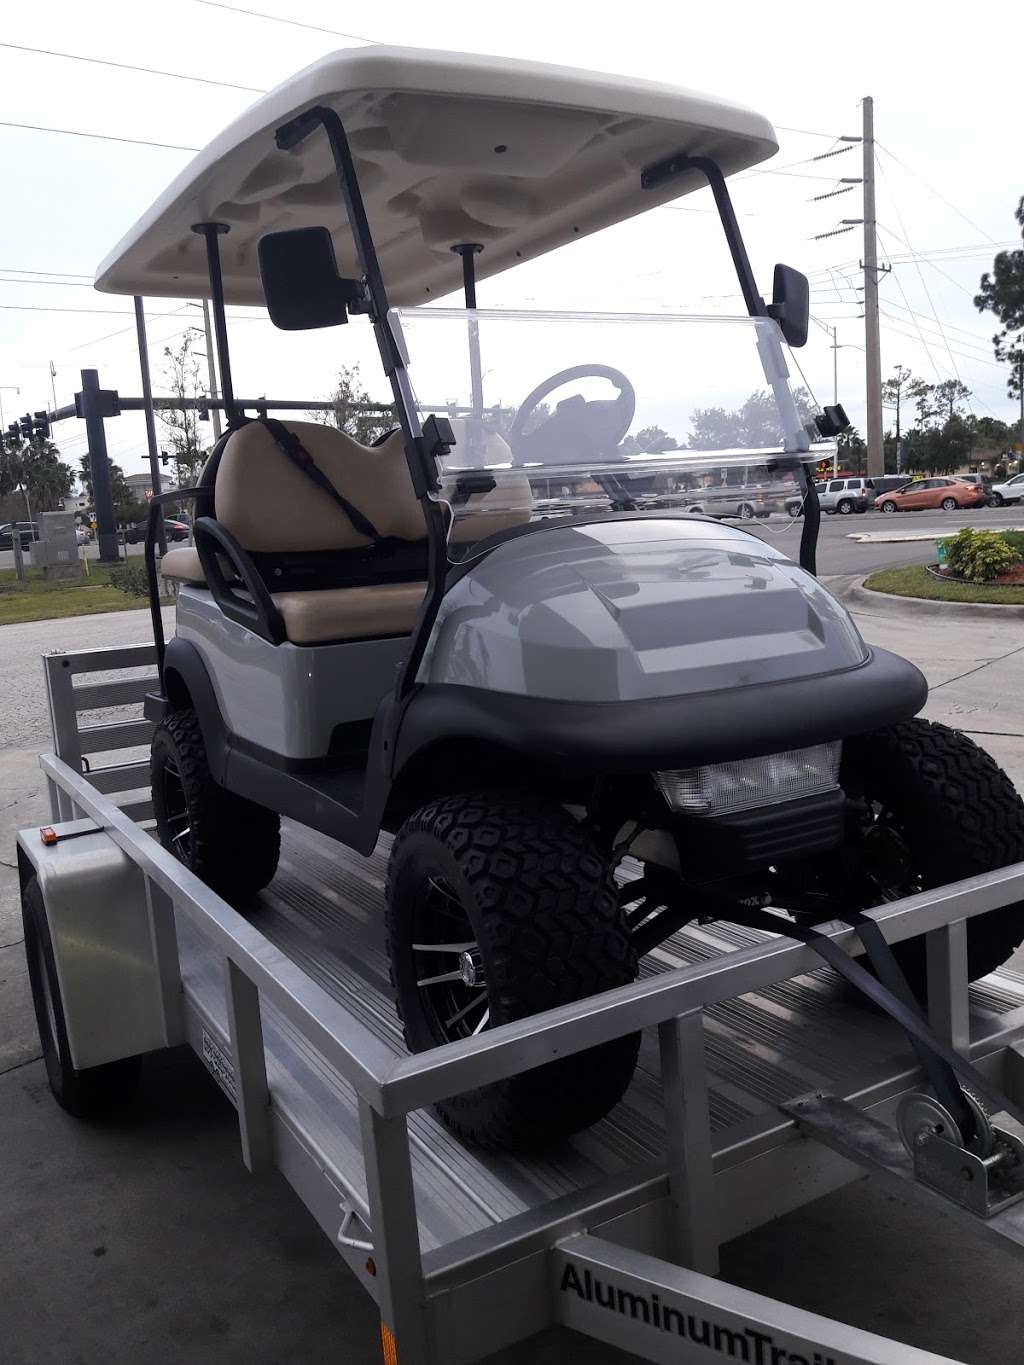 Beach Carts Daytona: Golf Cart & Bicycle Rentals | 313 S Atlantic Ave, Daytona Beach, FL 32118, USA | Phone: (386) 566-2325